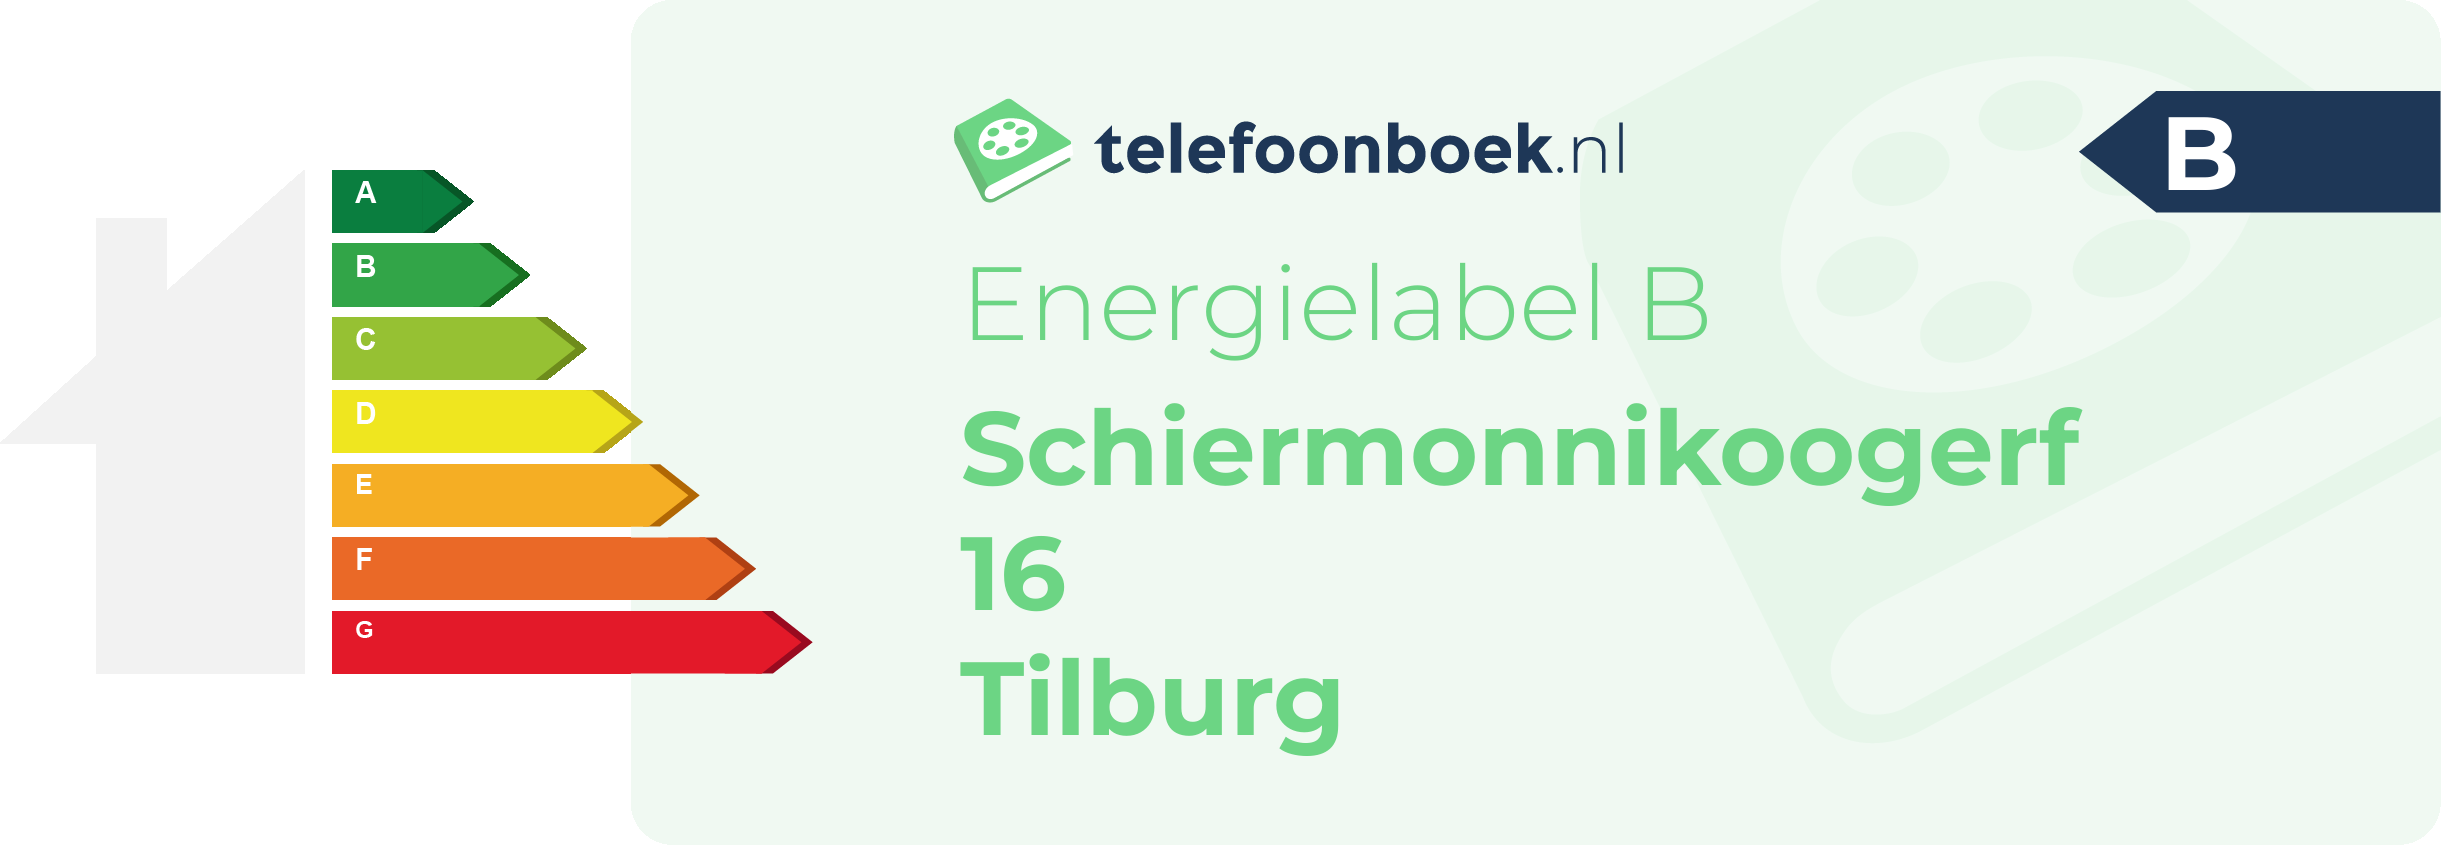 Energielabel Schiermonnikoogerf 16 Tilburg